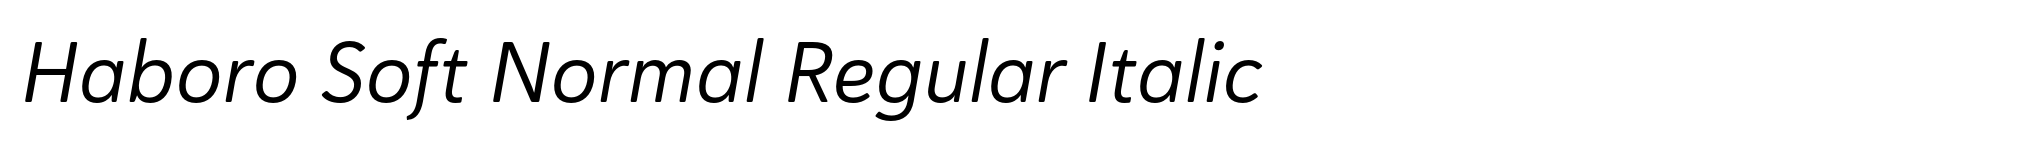 Haboro Soft Normal Regular Italic image